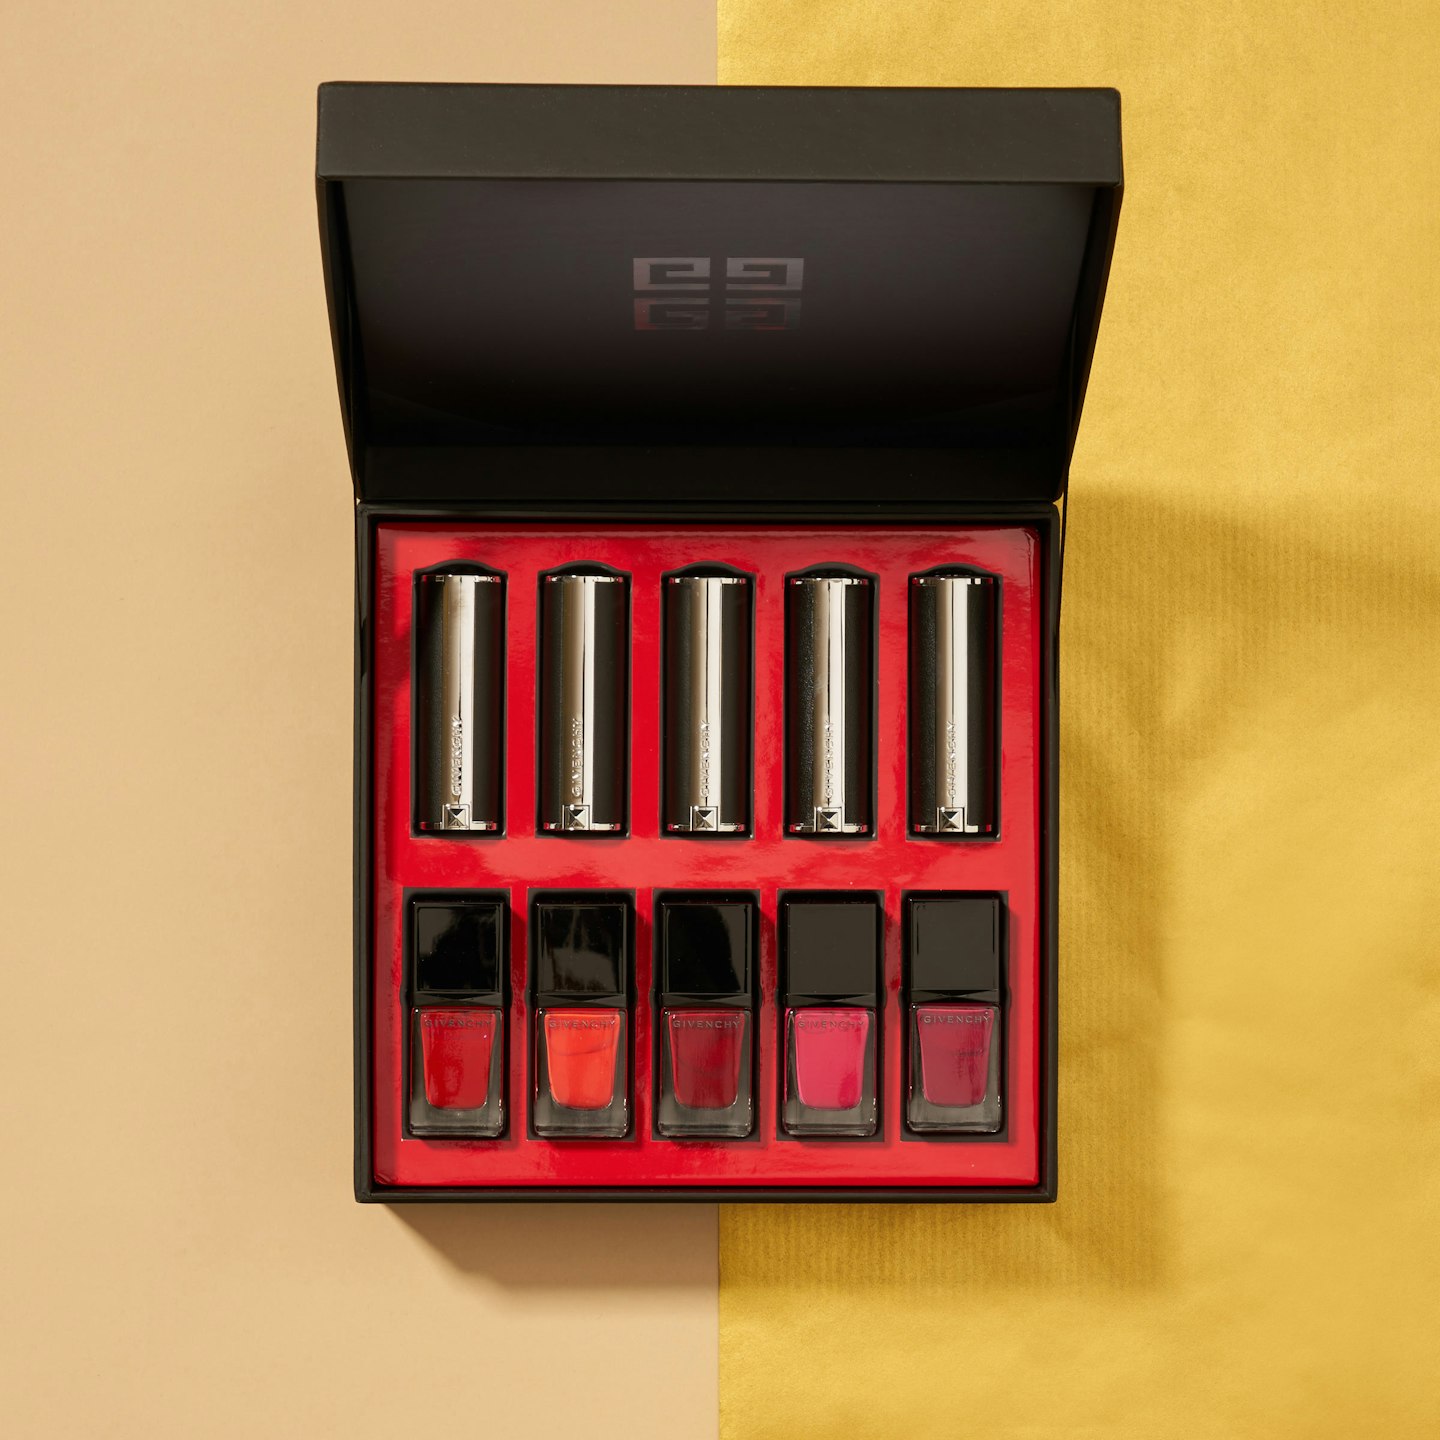 Grazia Beauty Gift Guide Givenchy Lipstick Nail Polish